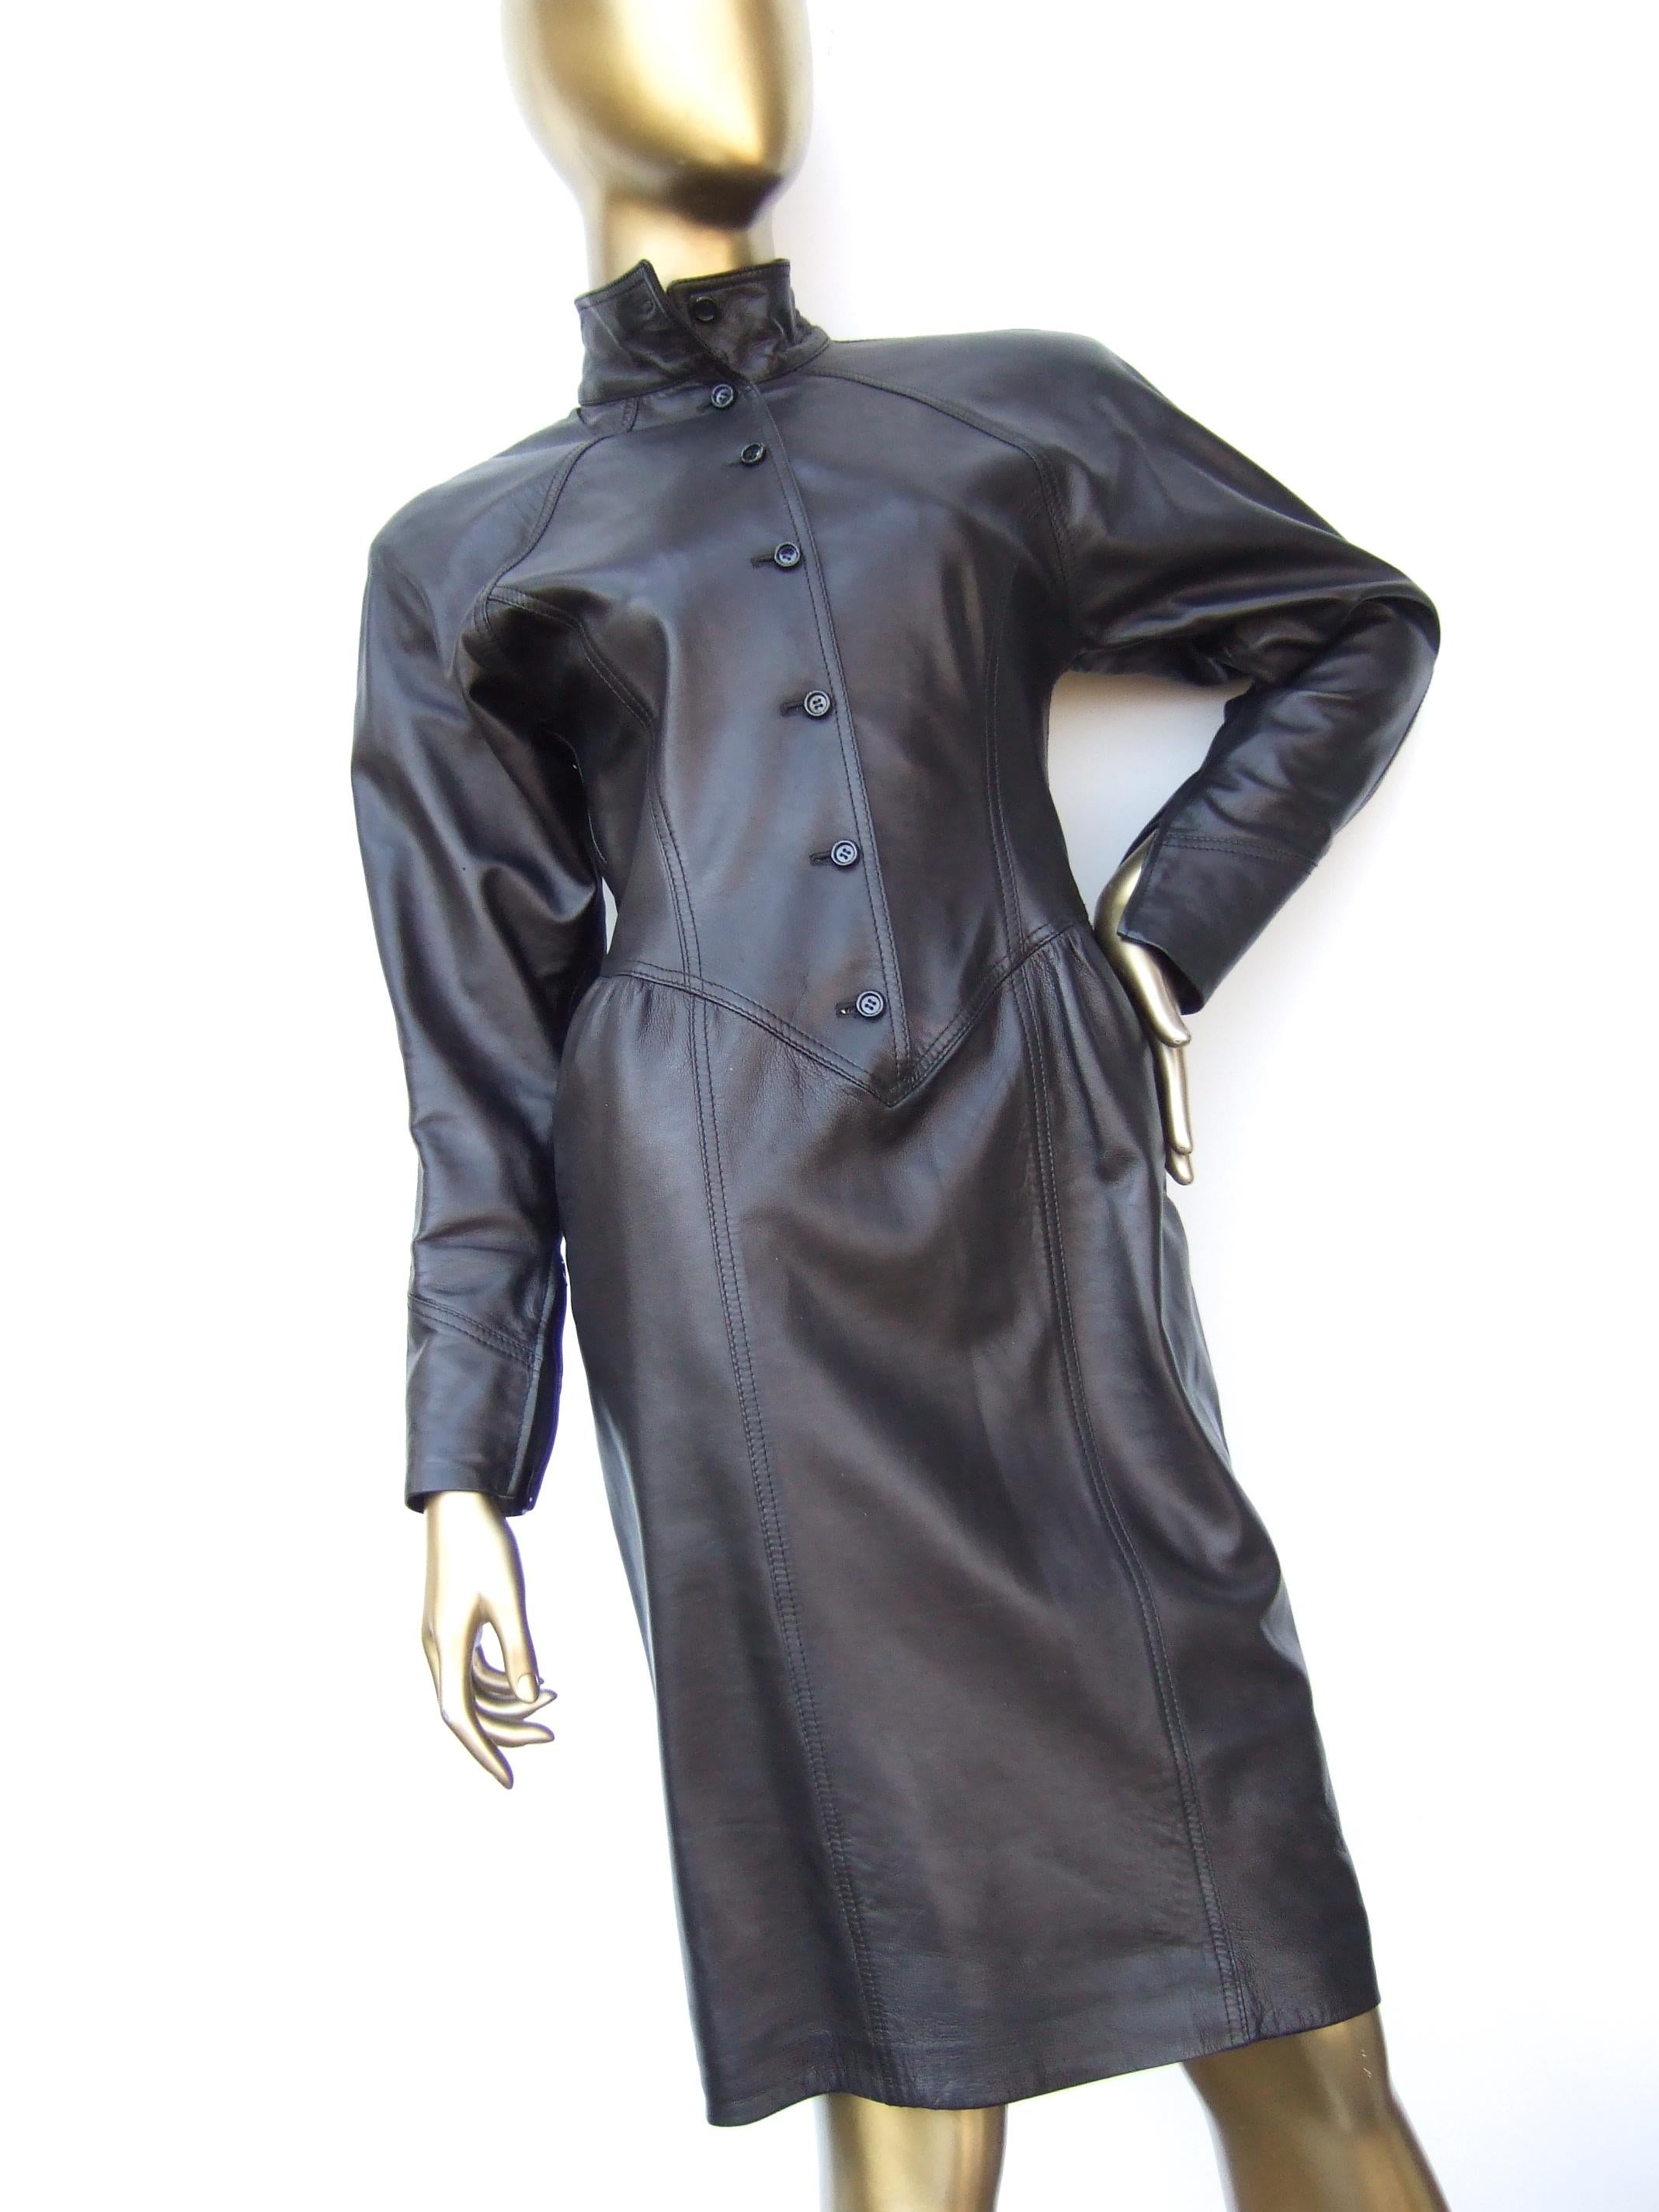 Emanuel Ungaro Paris Avant Garde Edgy Brown Leather Dress Made in Italy c 1980s en vente 4